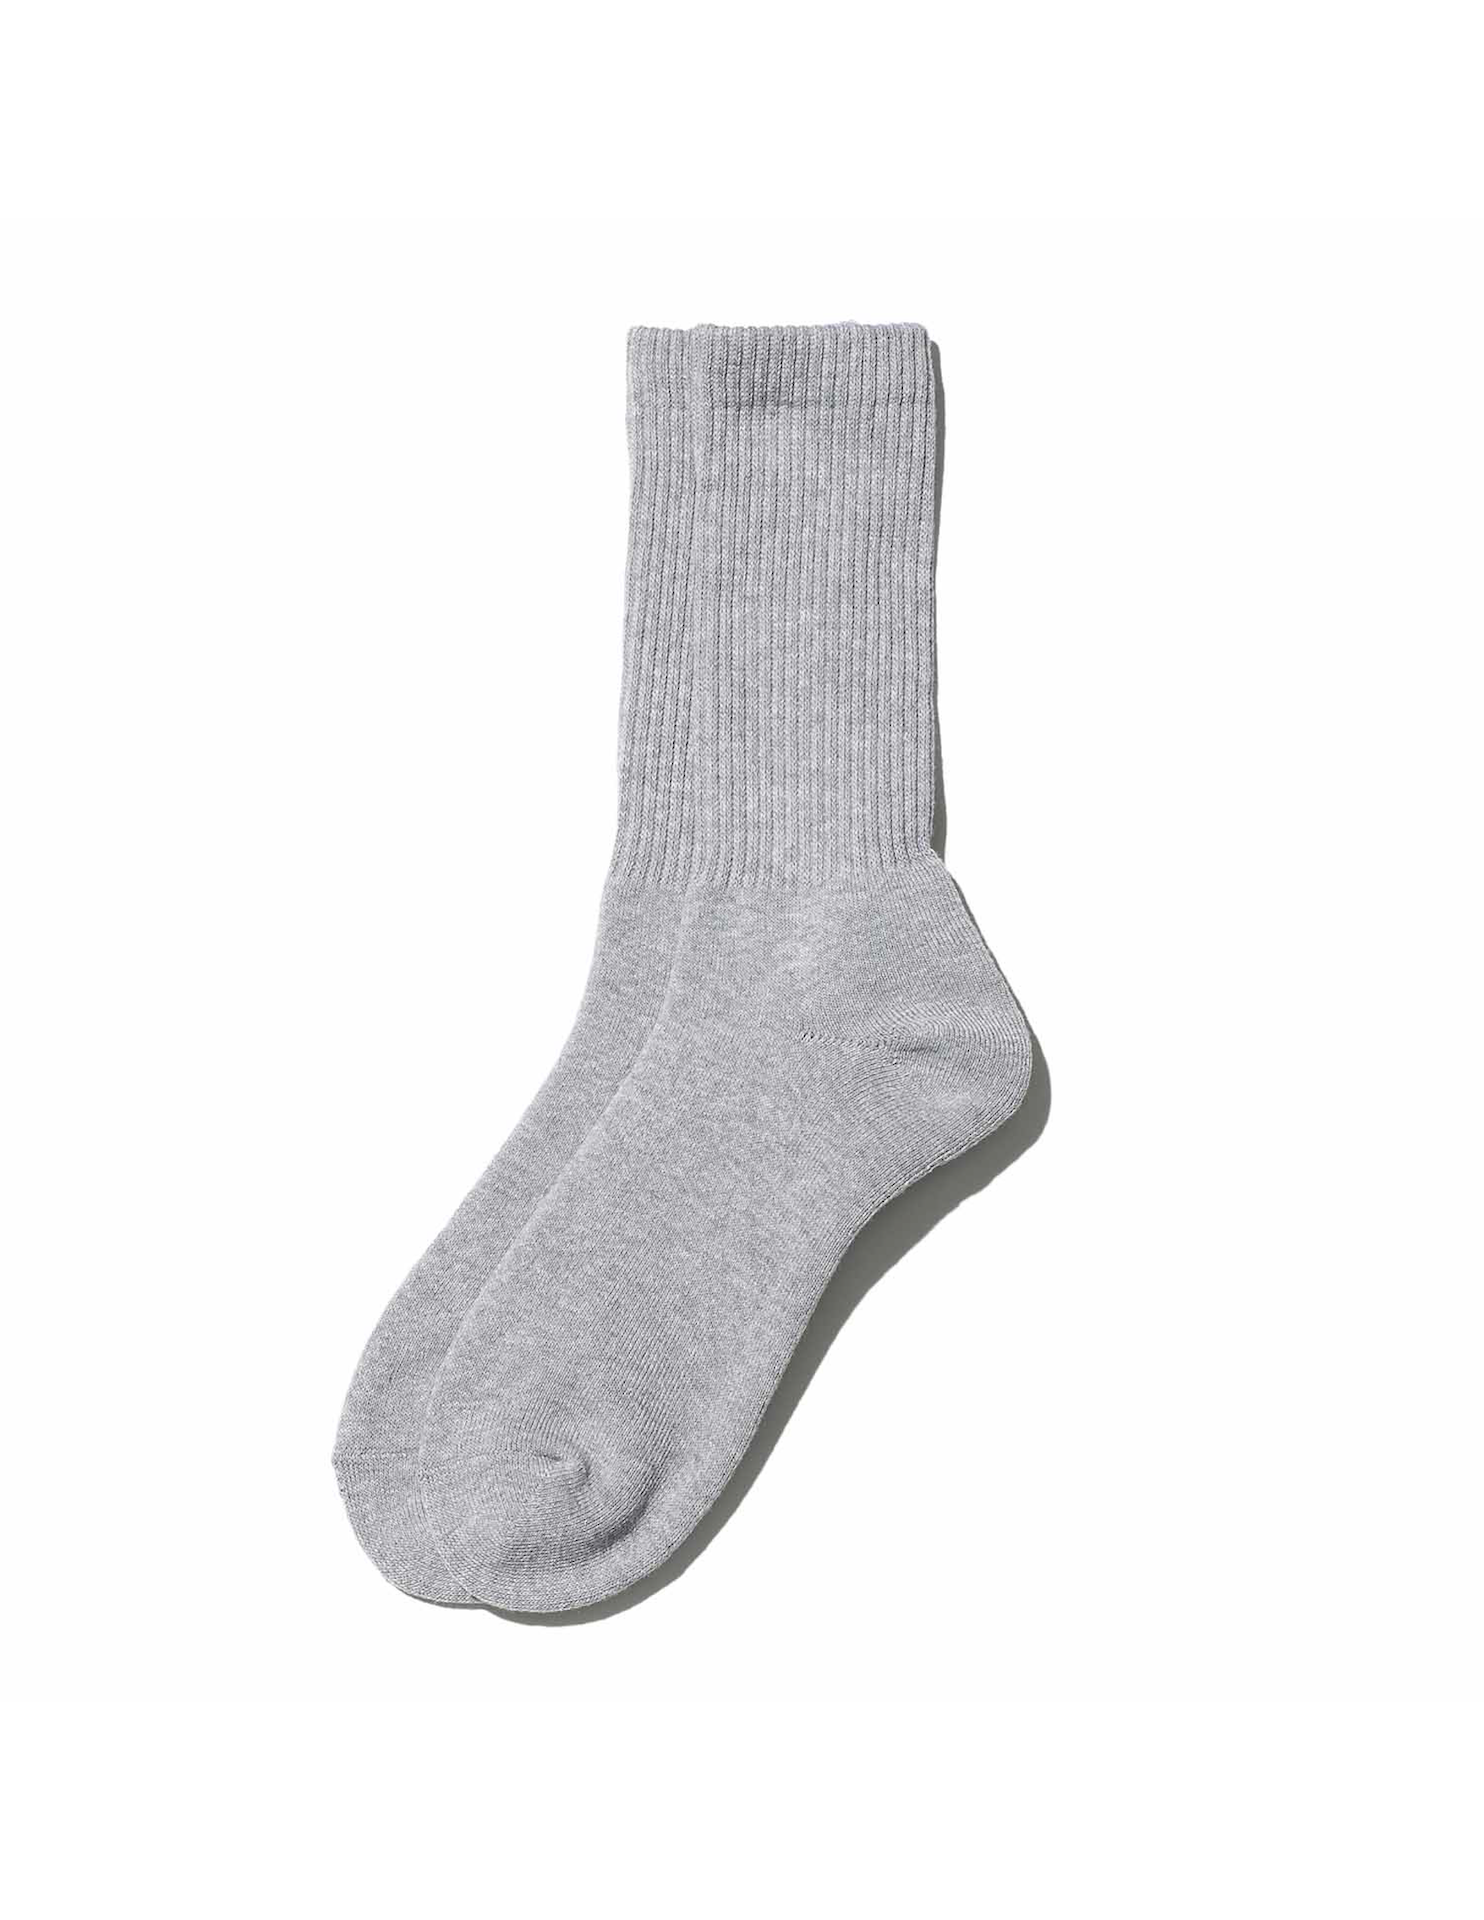 FreshService Original 3-Pack Socks (Ash Gray)